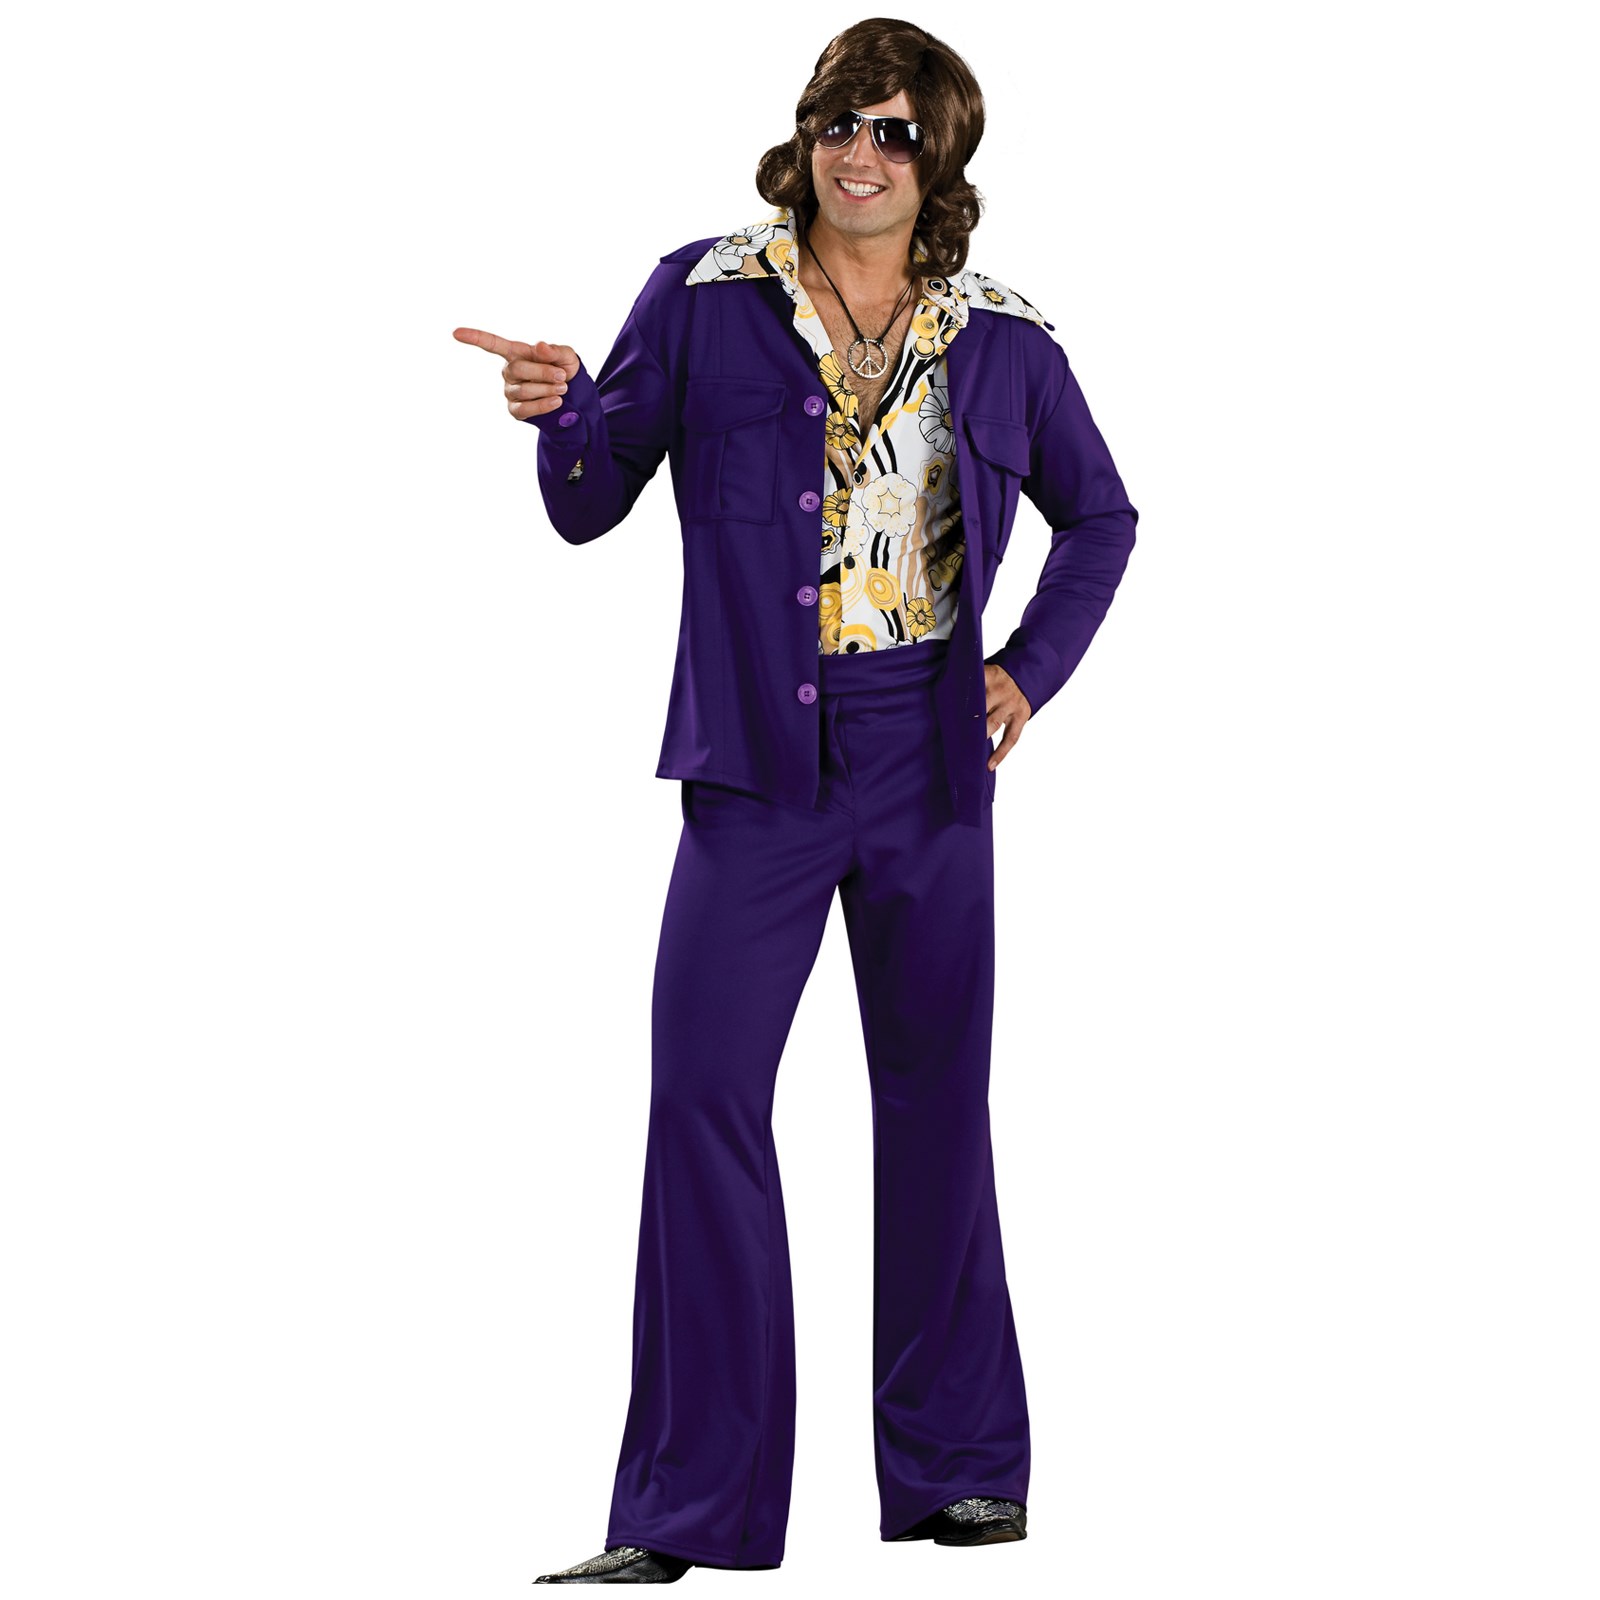 Leisure Suit Deluxe Purple Adult Costume